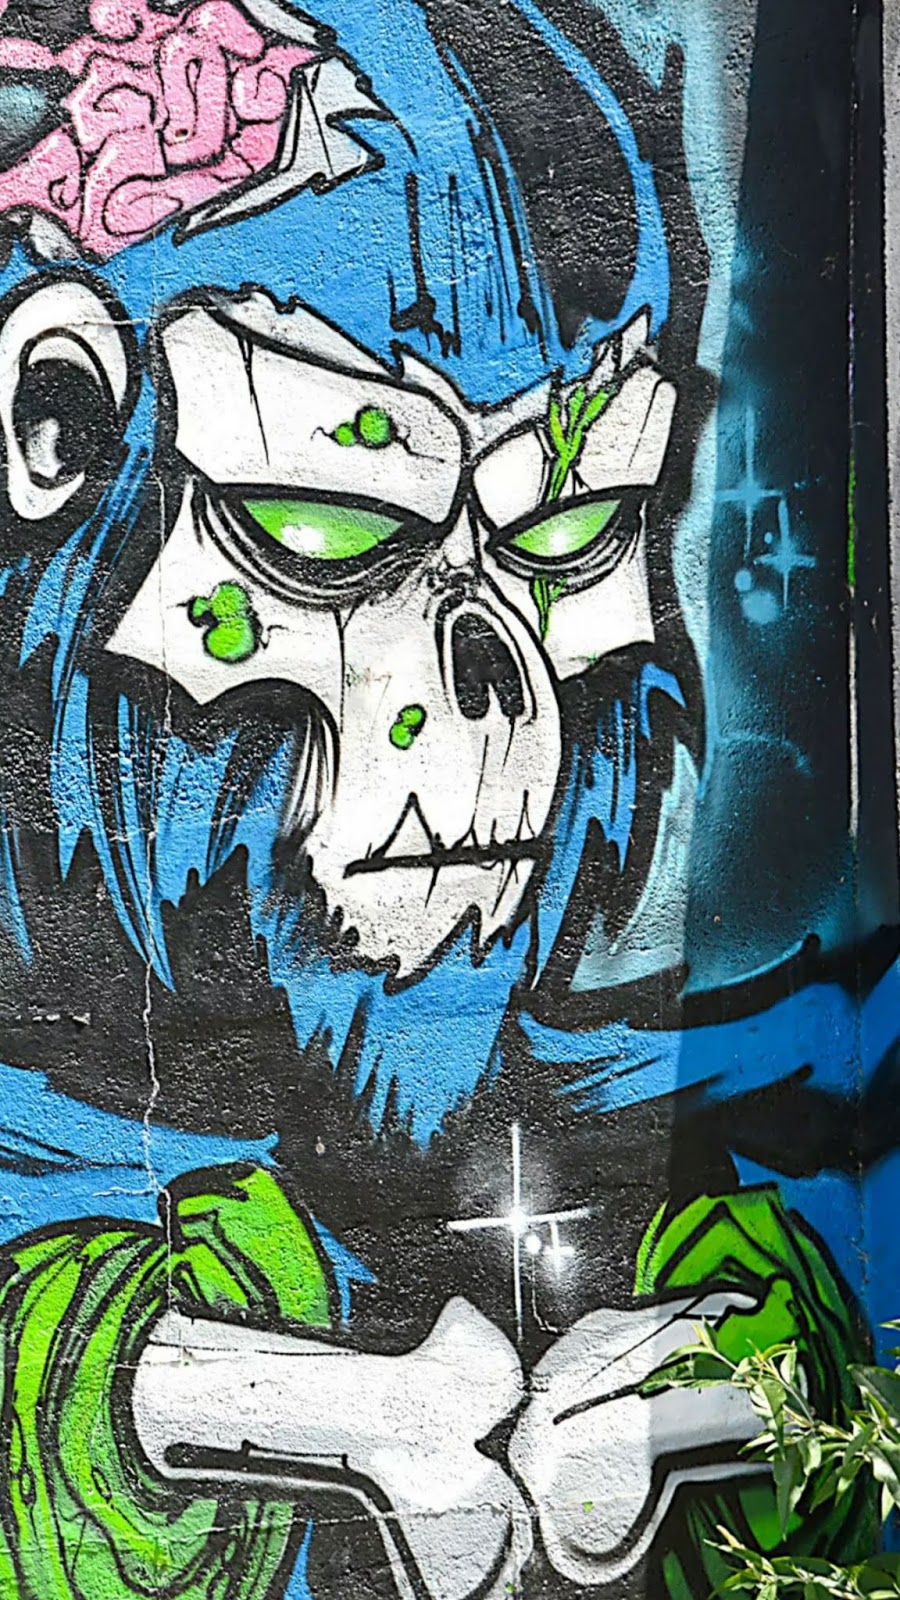 wallpaper android keren untuk hp,graffiti,green,art,street art,fictional character